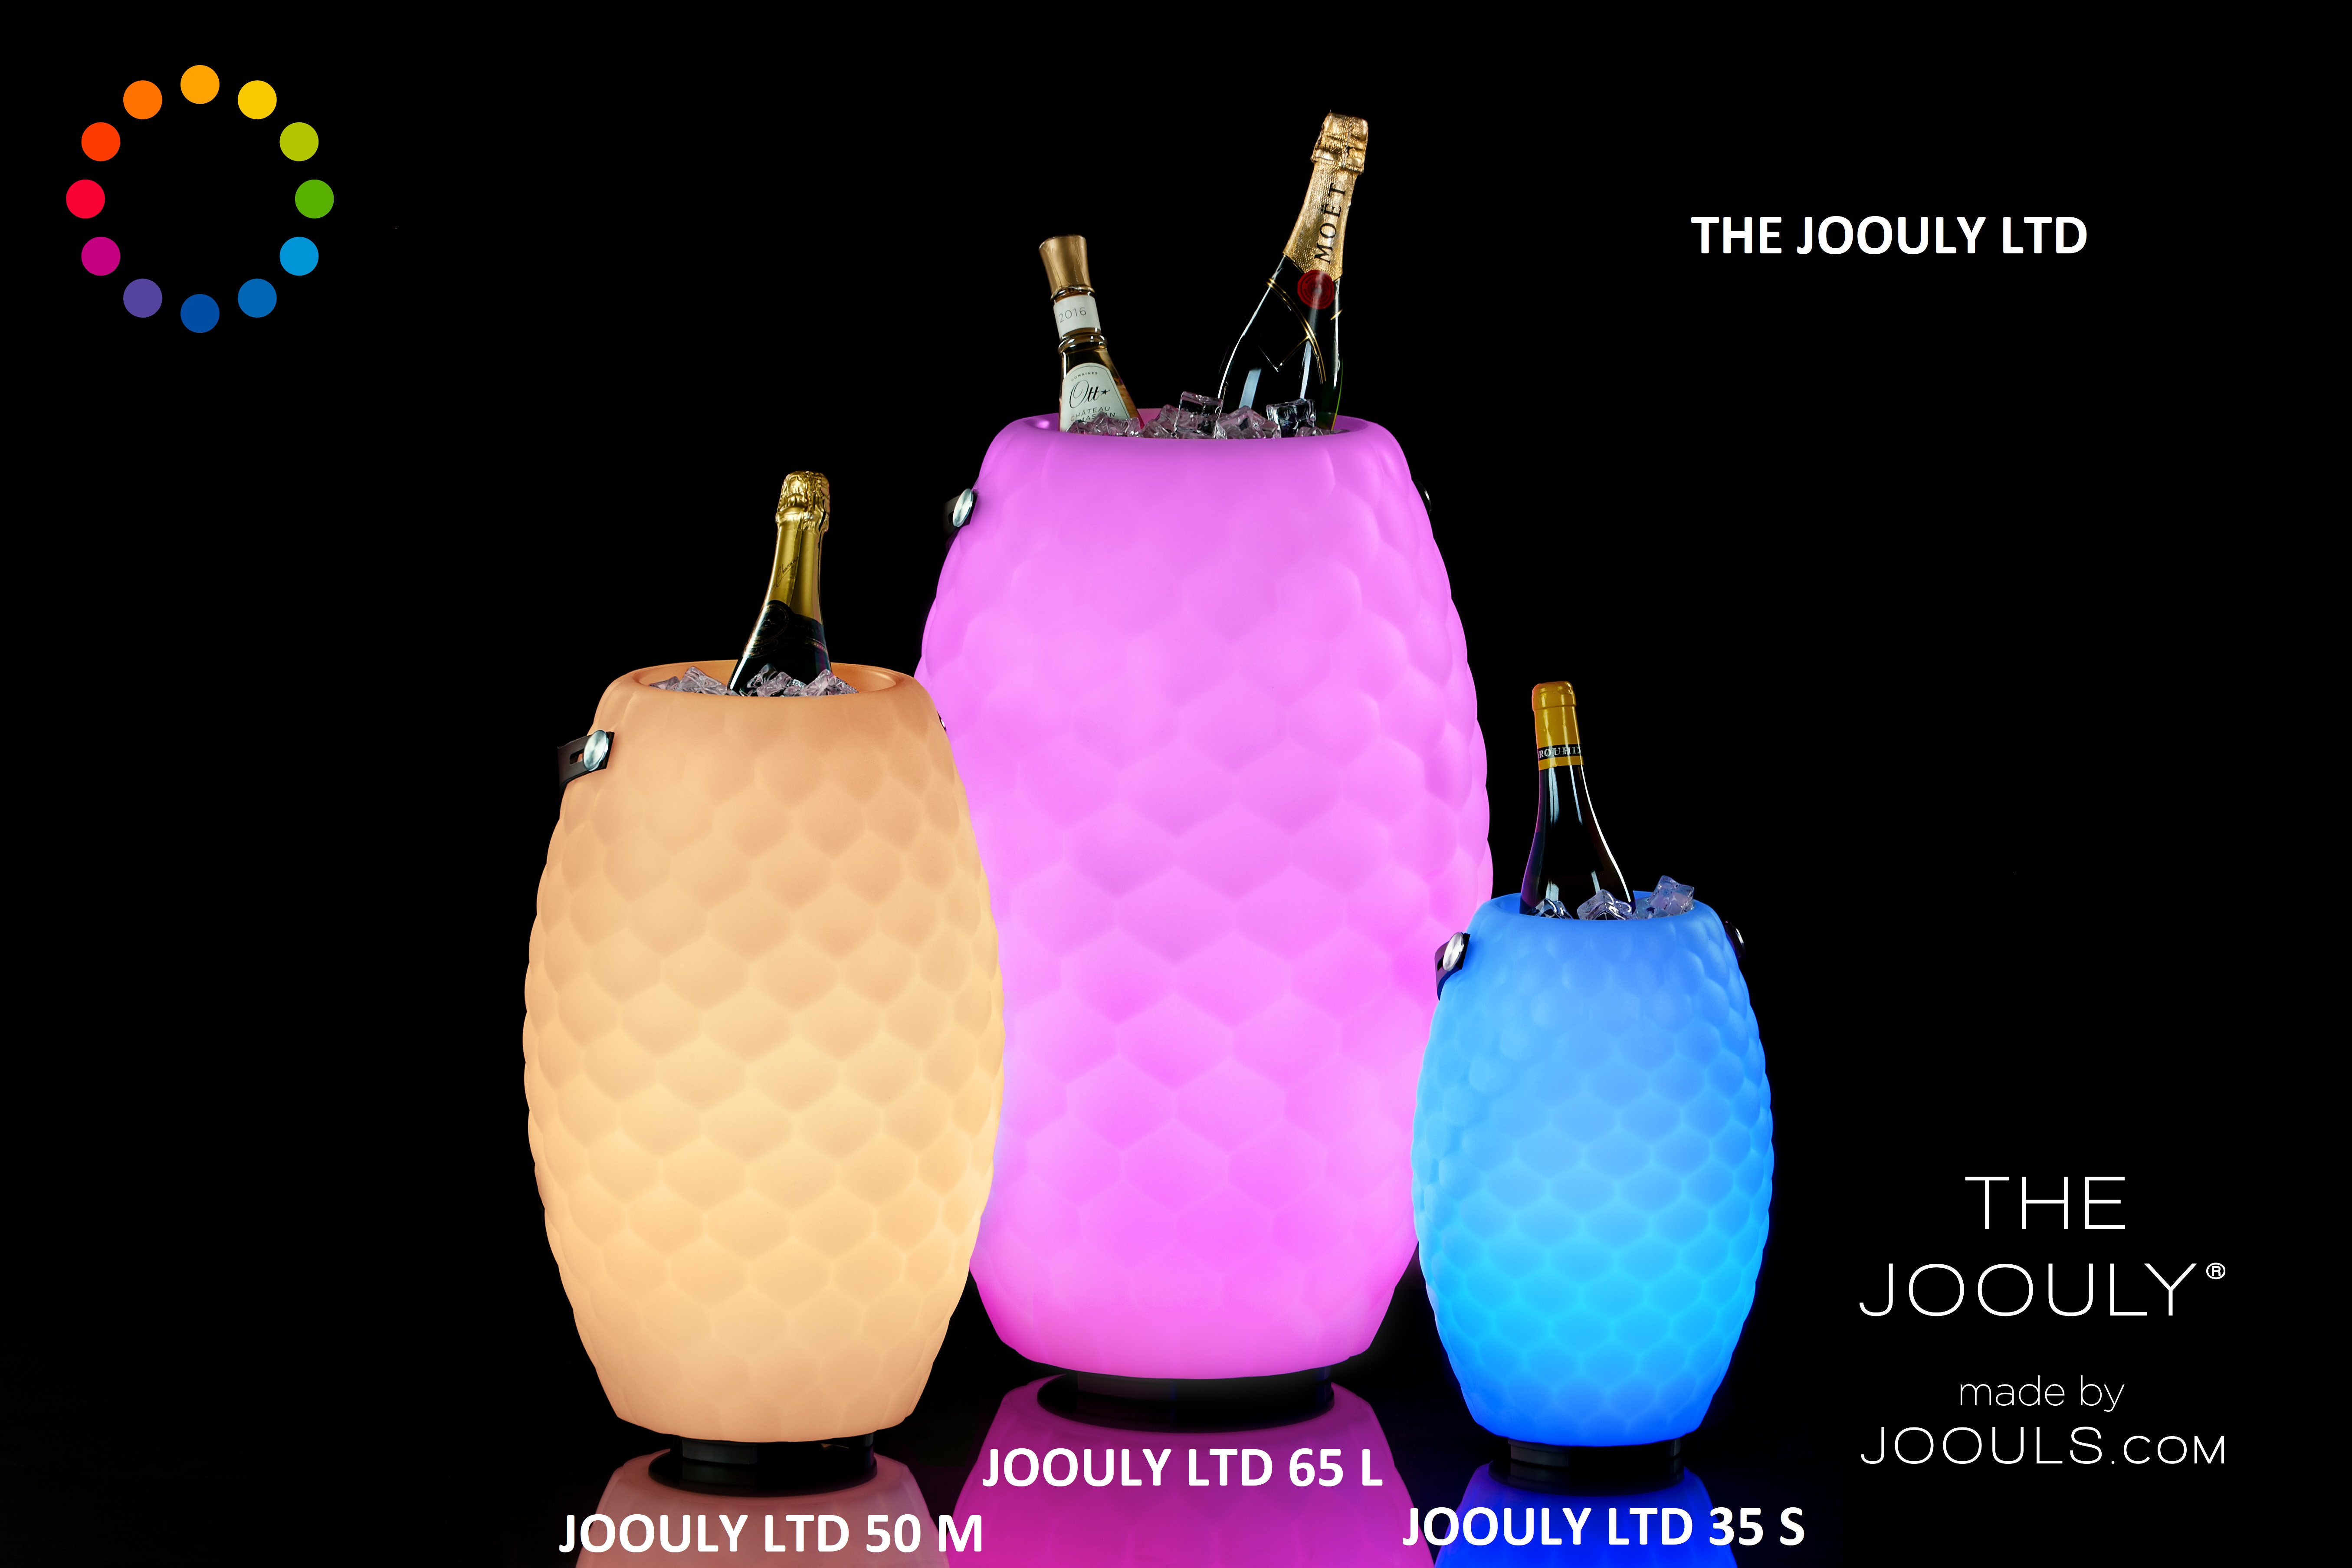 The Joouly LTD 35